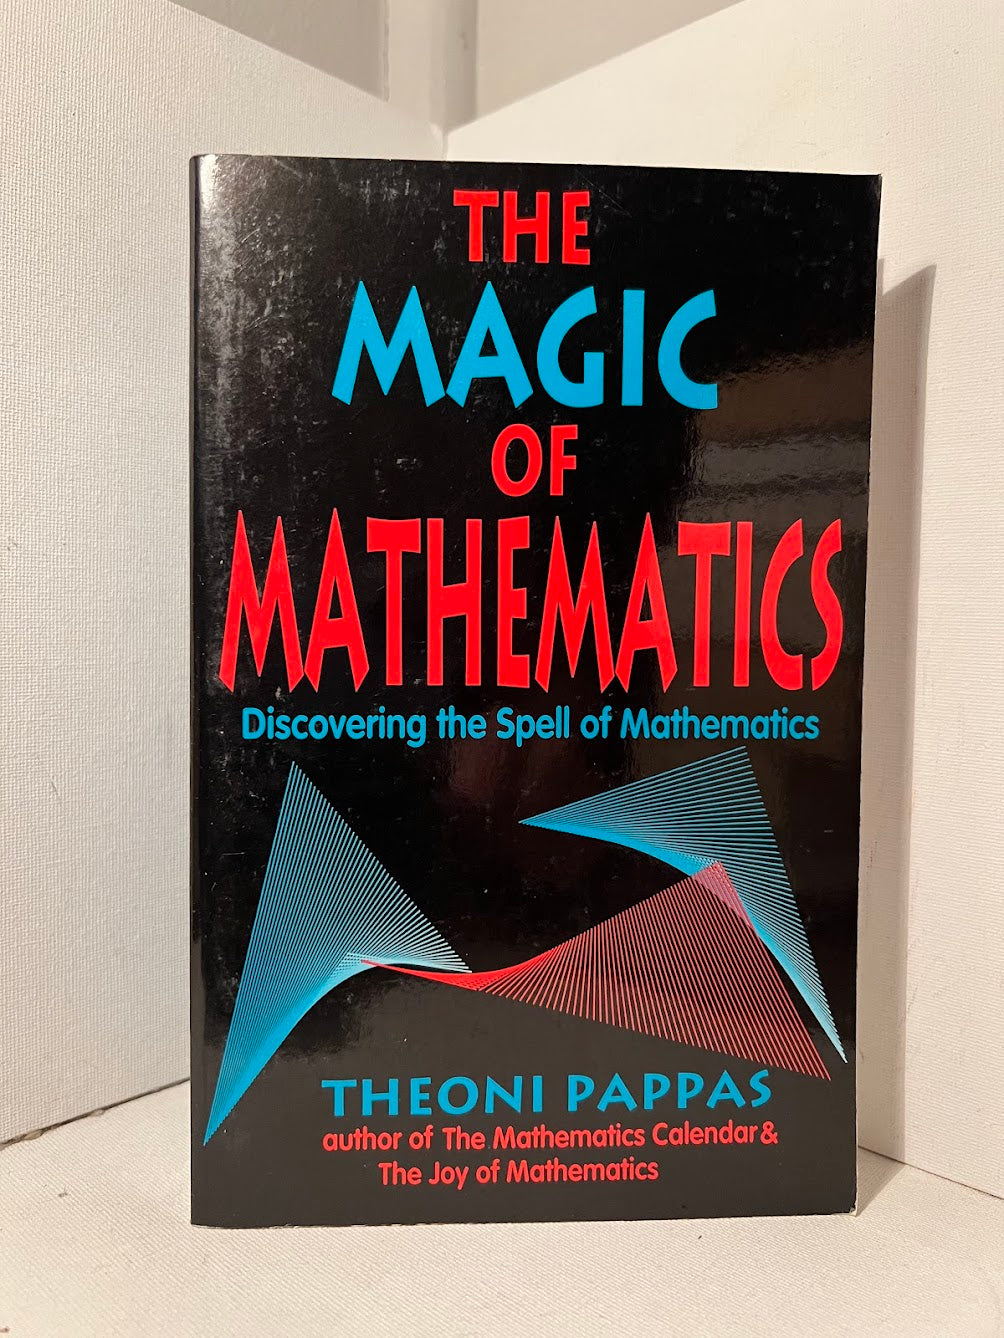 The Magic of Mathematics by Theoni Pappas